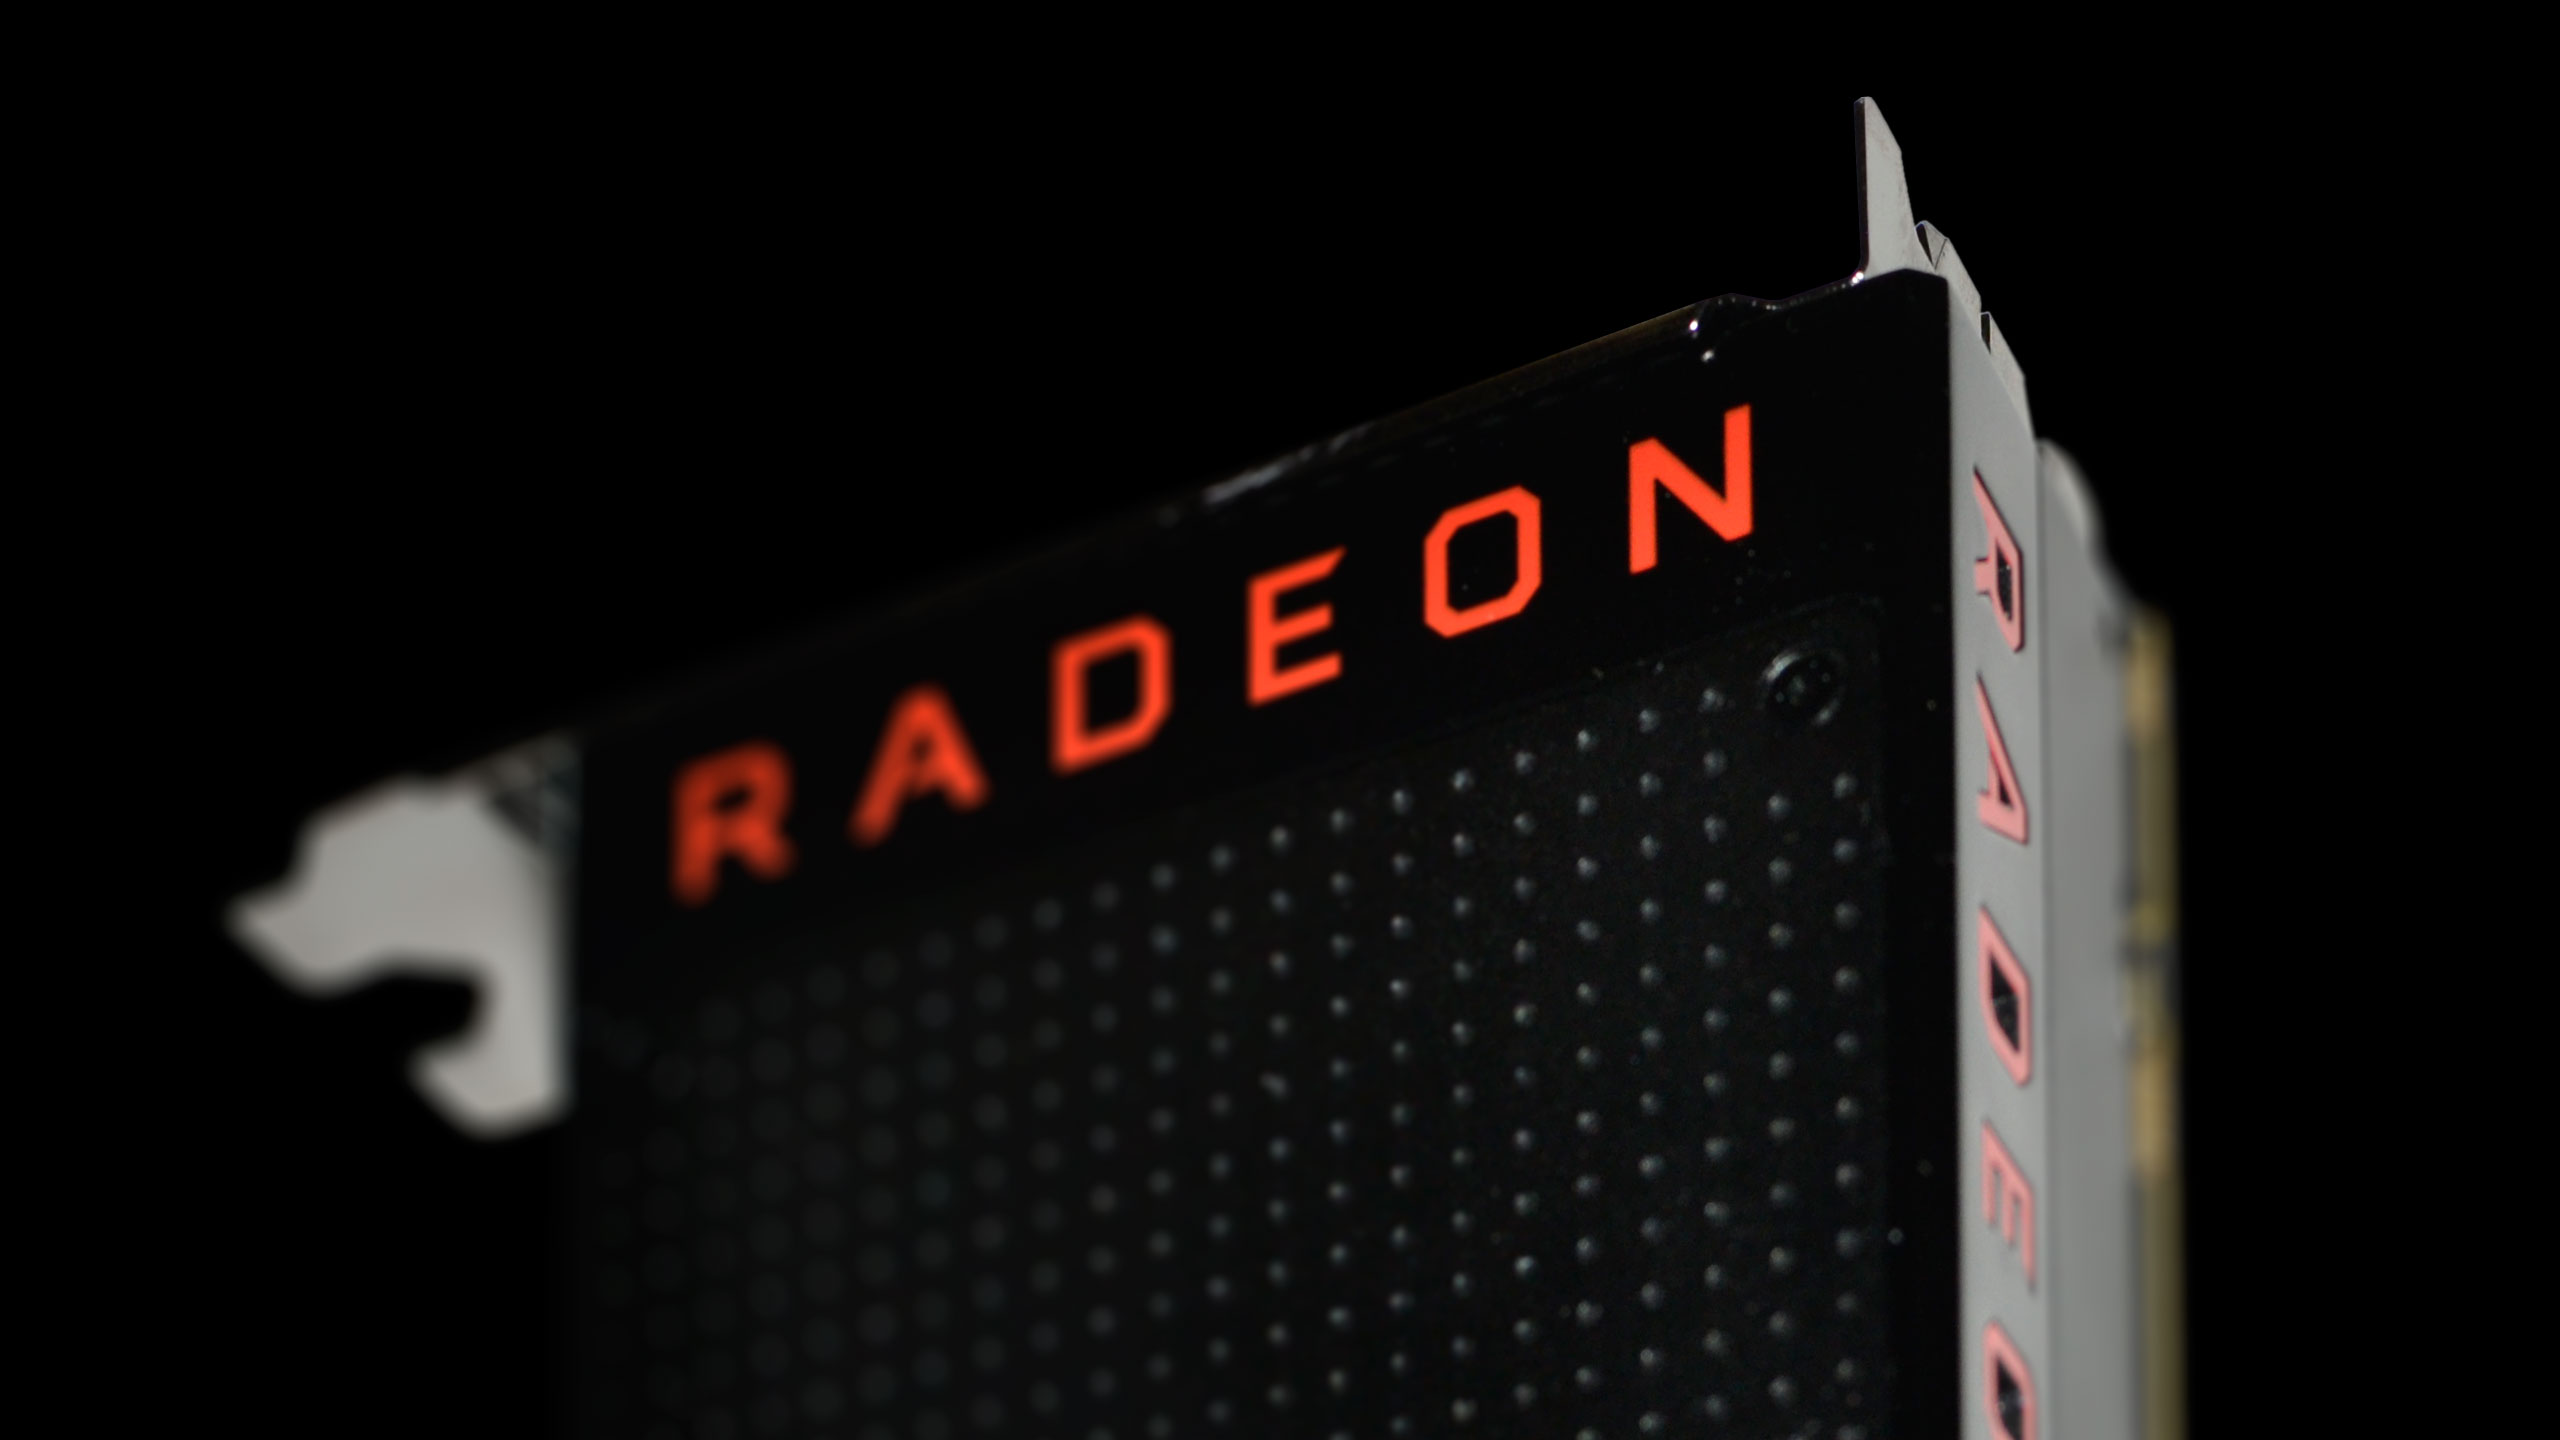 Mining Performance Check: AMD's RX Vega 64 Blows Away The Titan V At H/s With XMR Monero